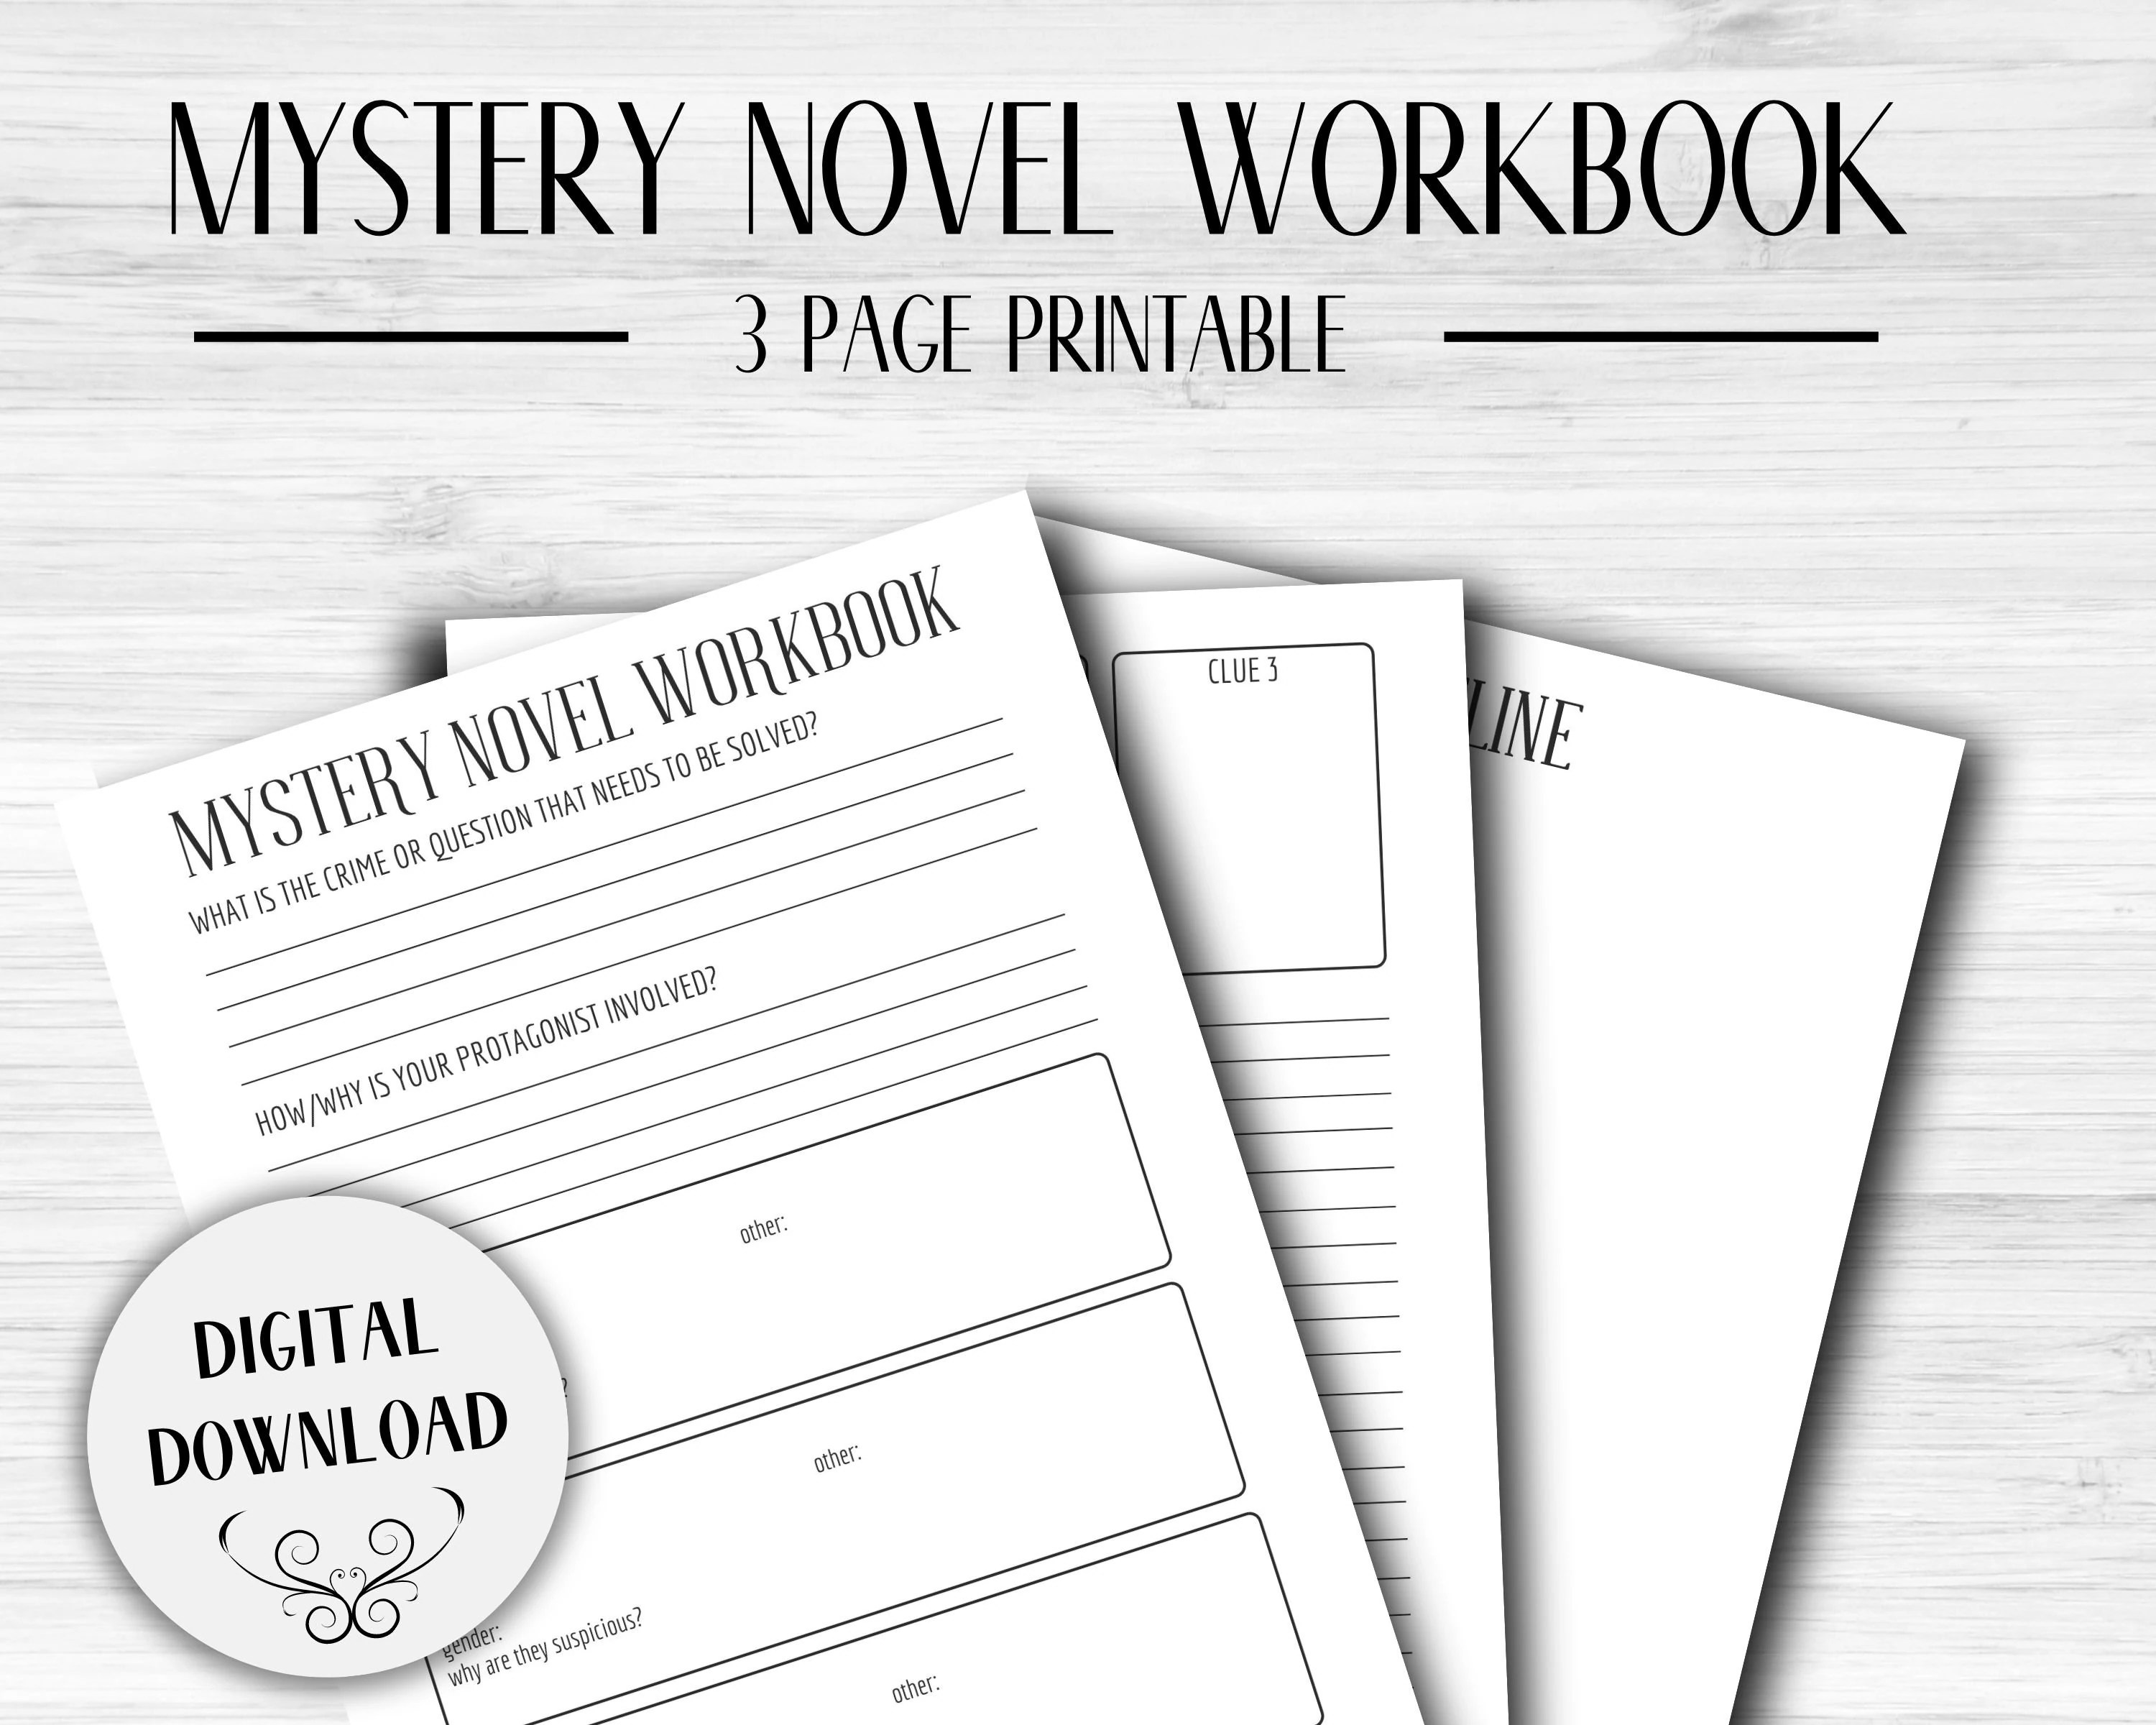 How To Write A Good Mystery Novel